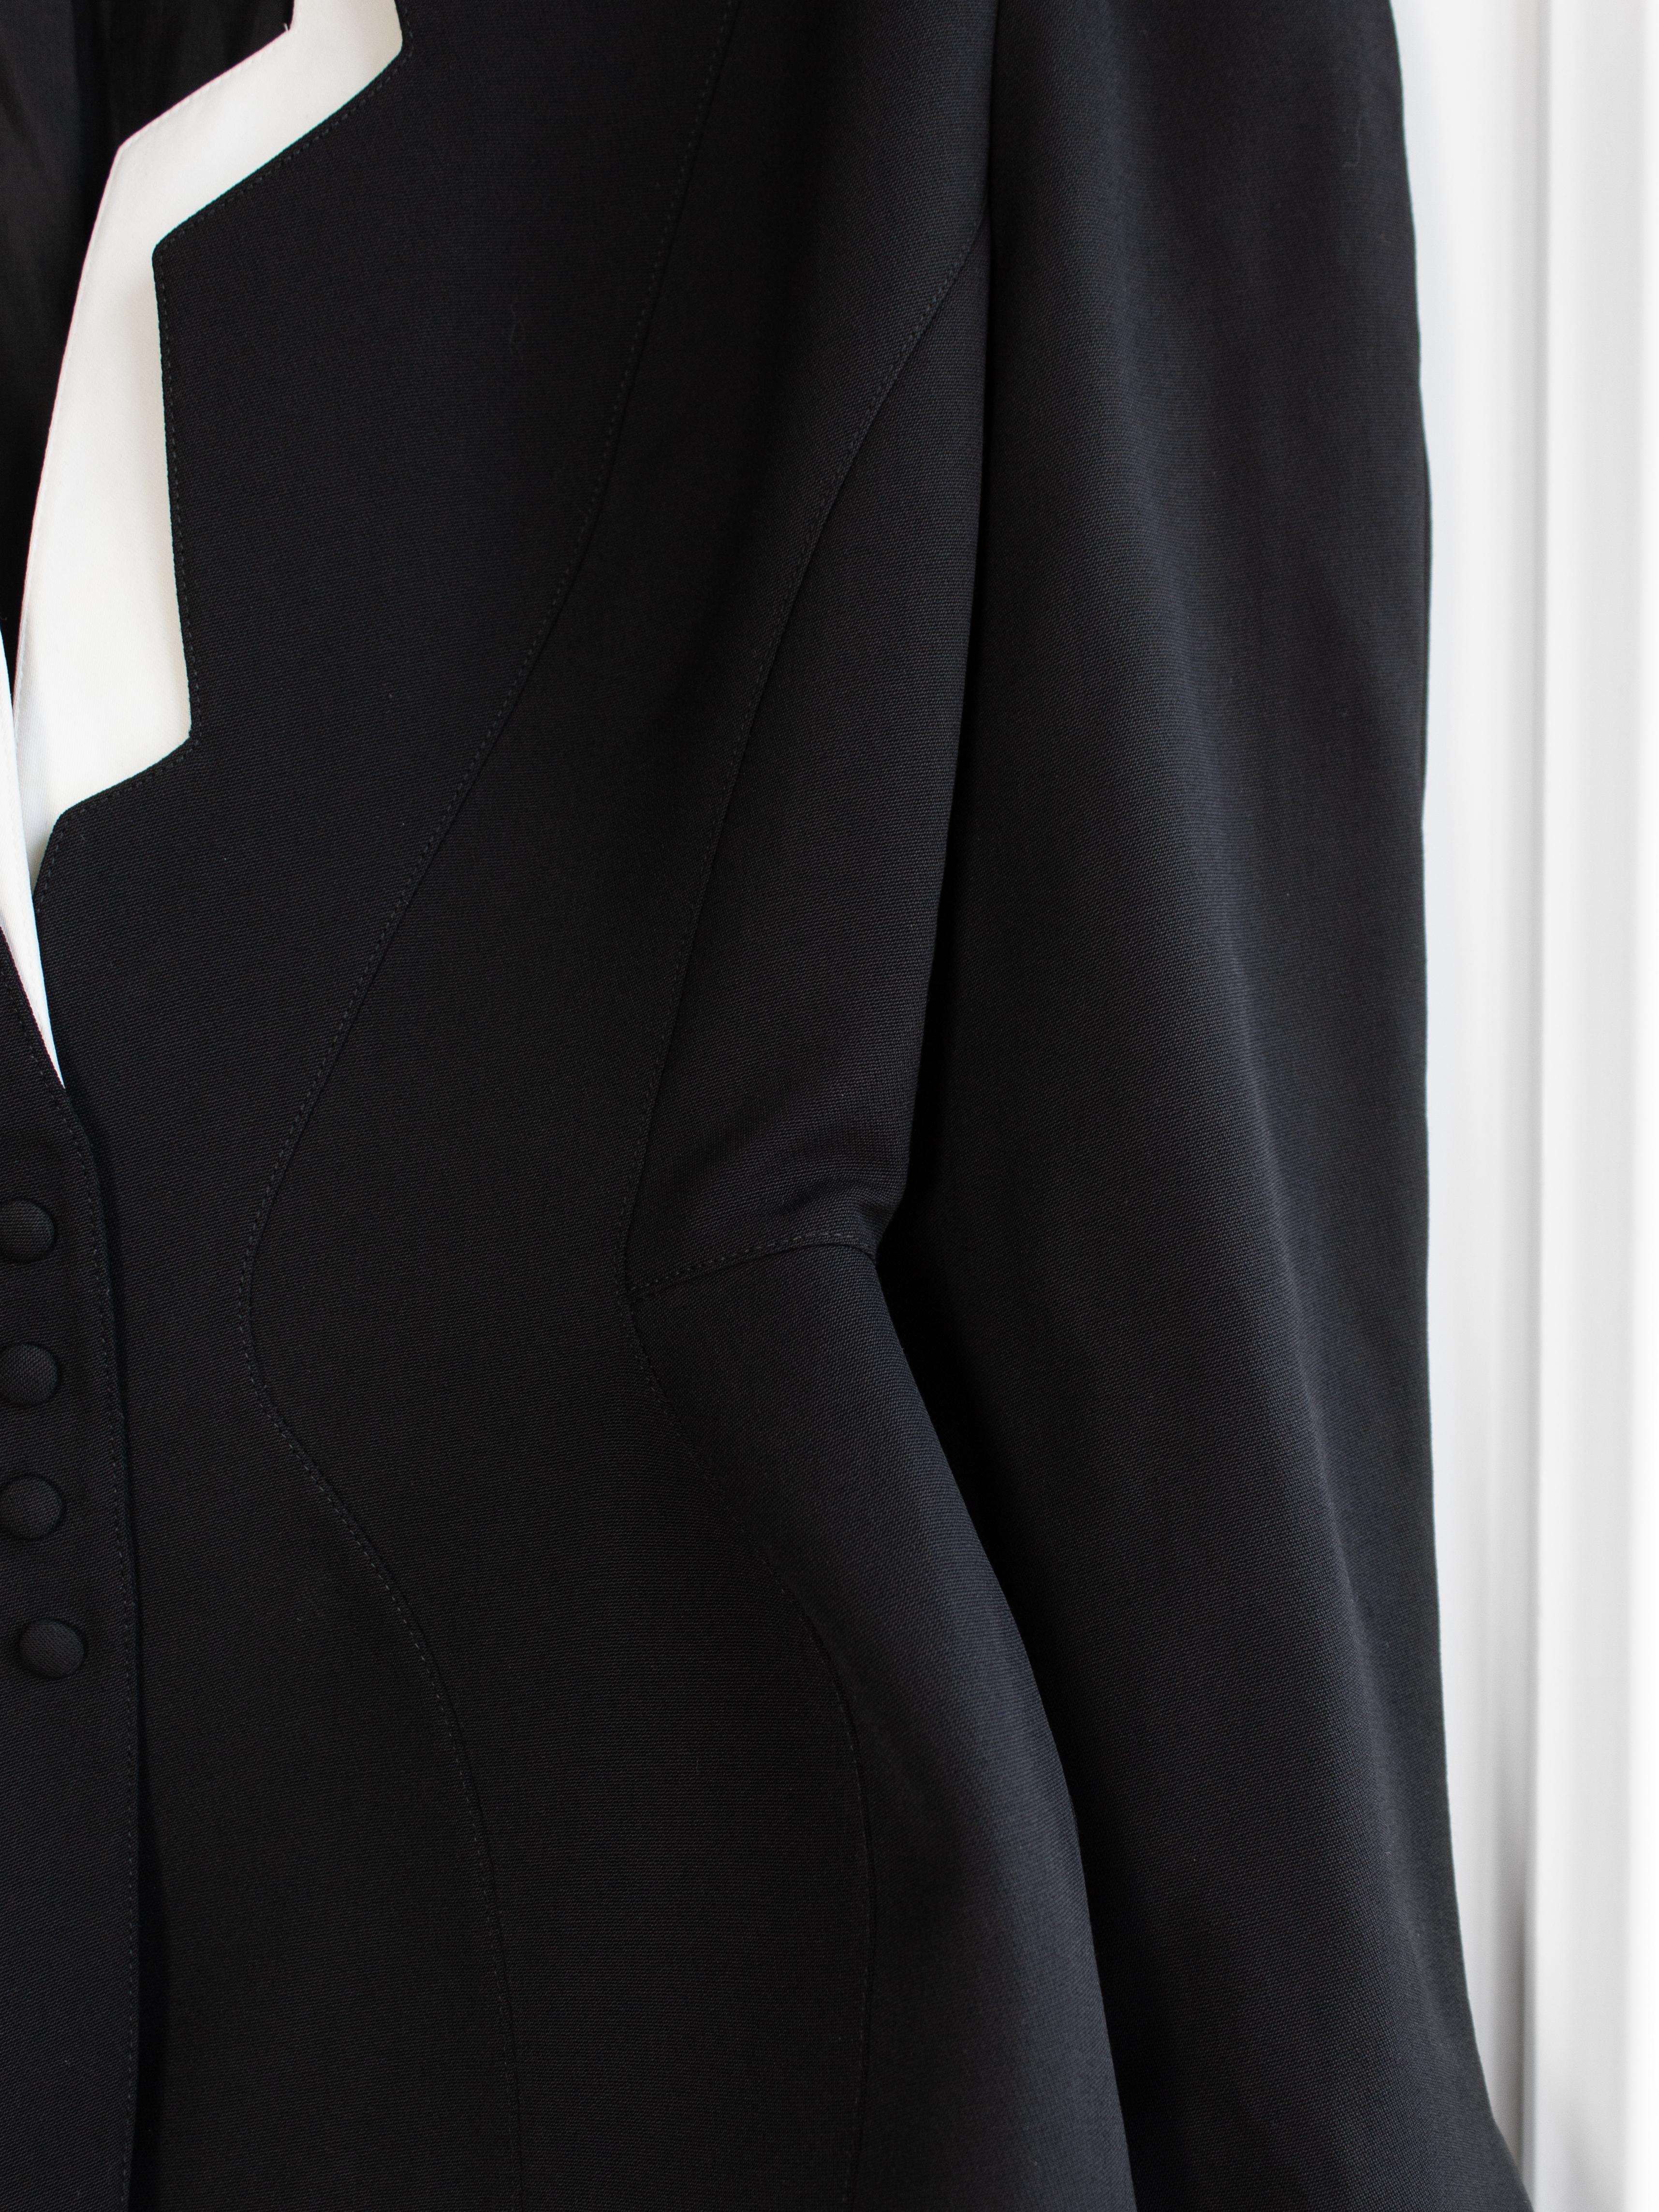 Icone Thierry Mugler Vintage S/S 1994 Black White Zigzag Sculptural Jacket en vente 10